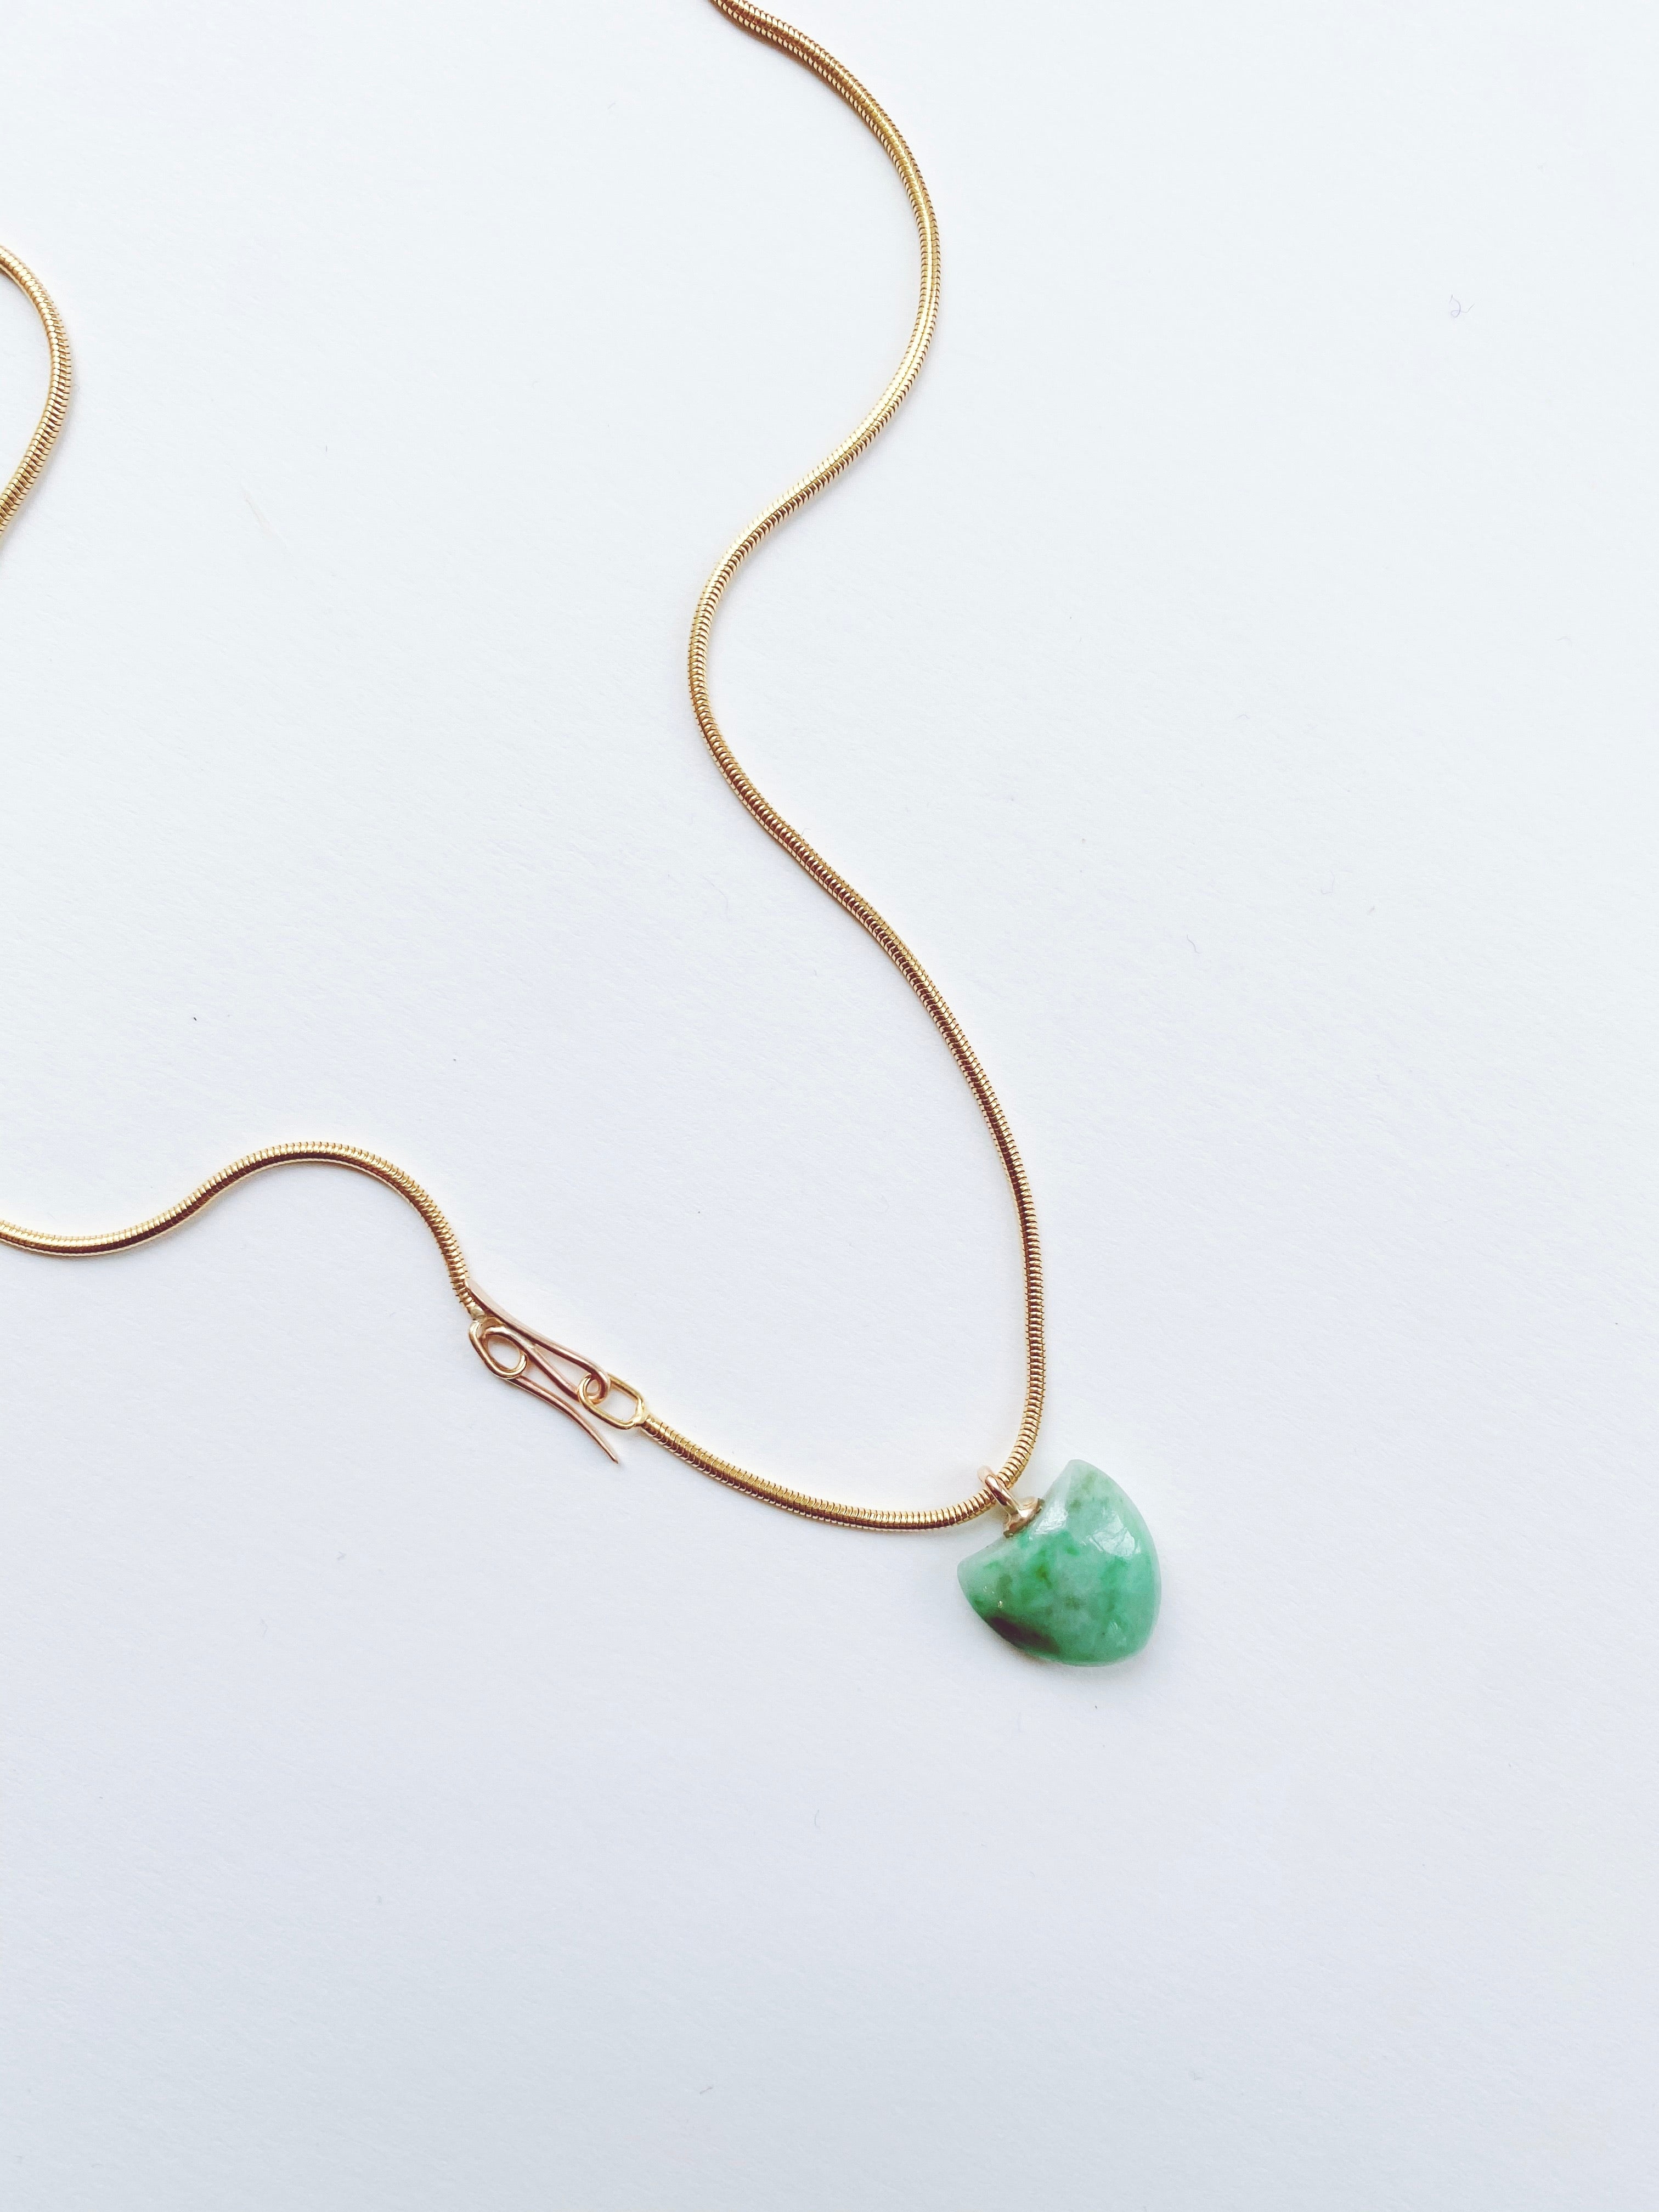 Mini Papal Necklace - Green Jade